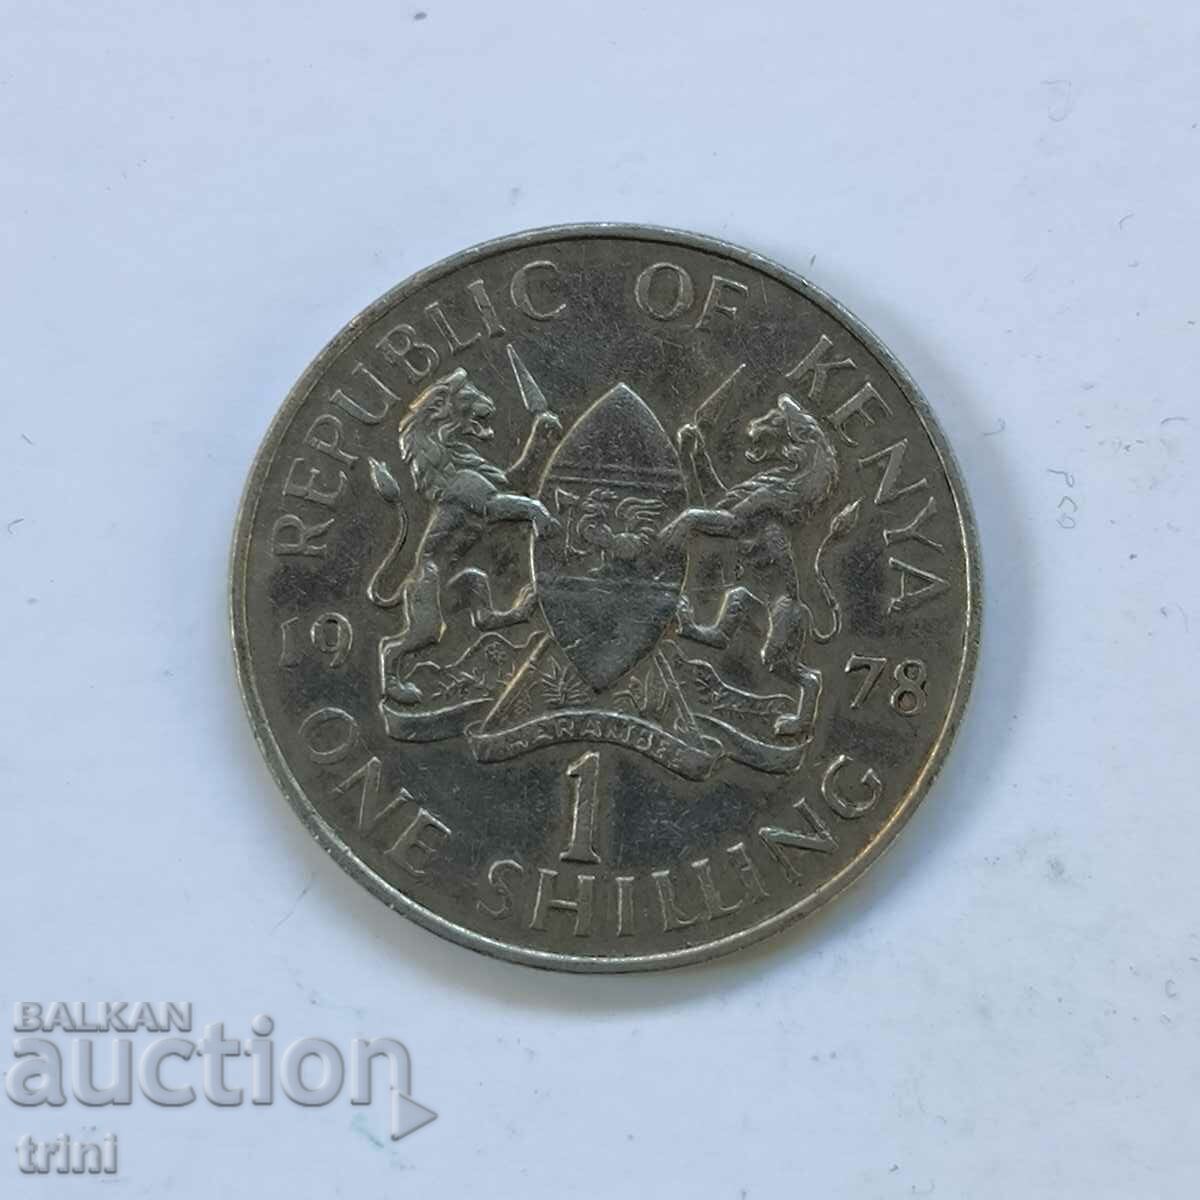 Kenya 1 Shilling 1978